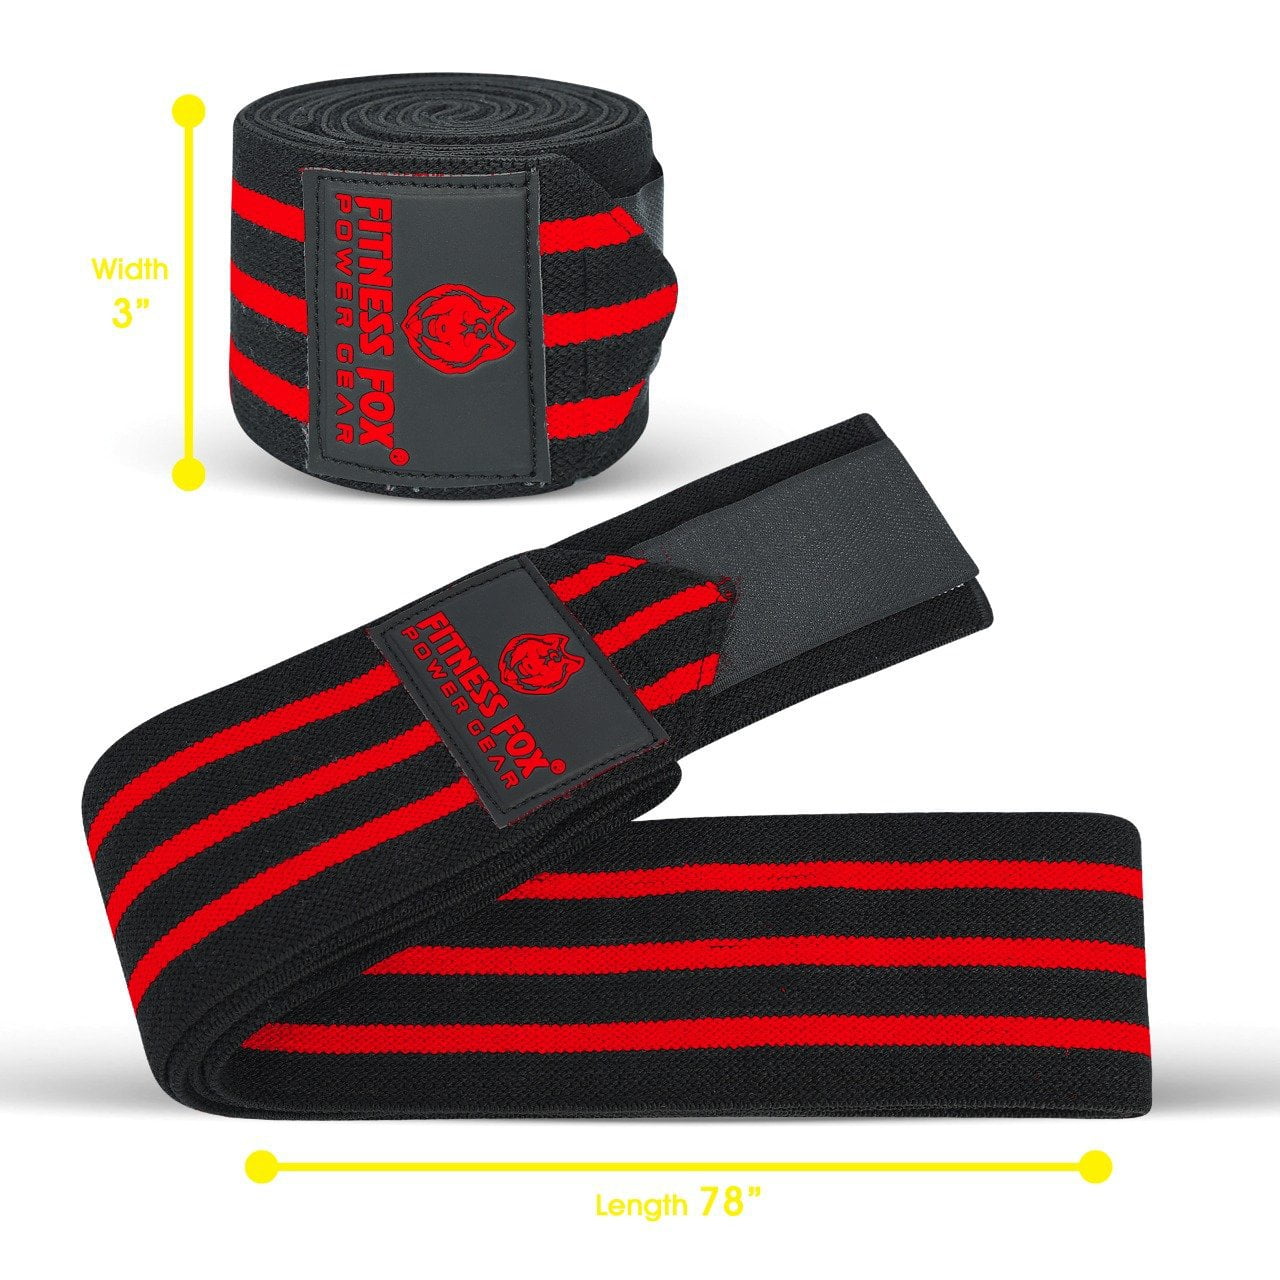 Fitnessfox Knee Wraps 72 inch (Black & Red)